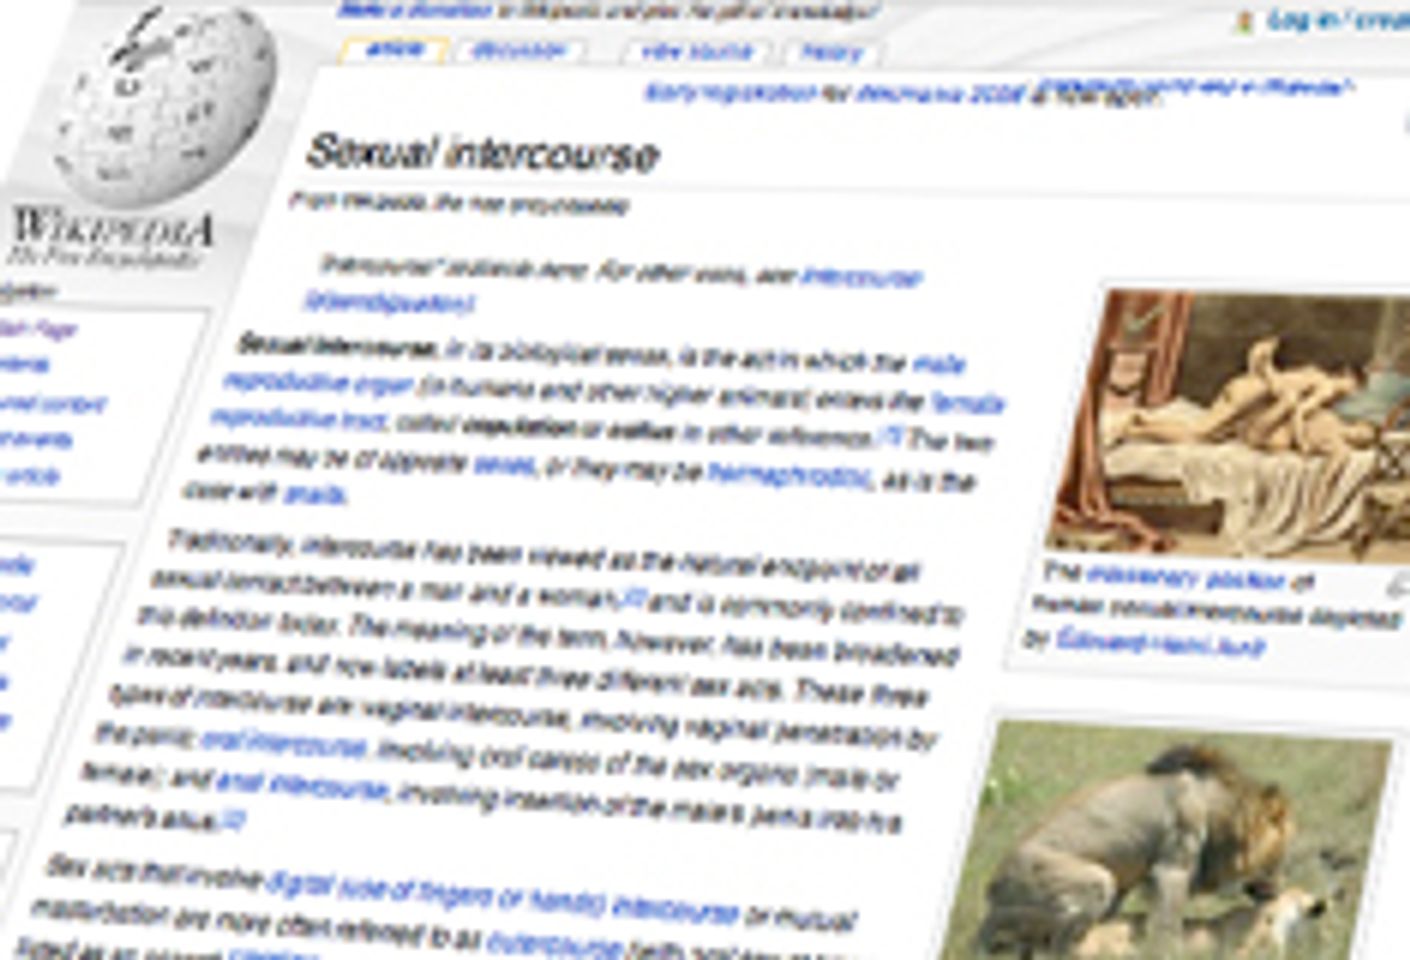 Wikipedia Blasted for Pornographic Material